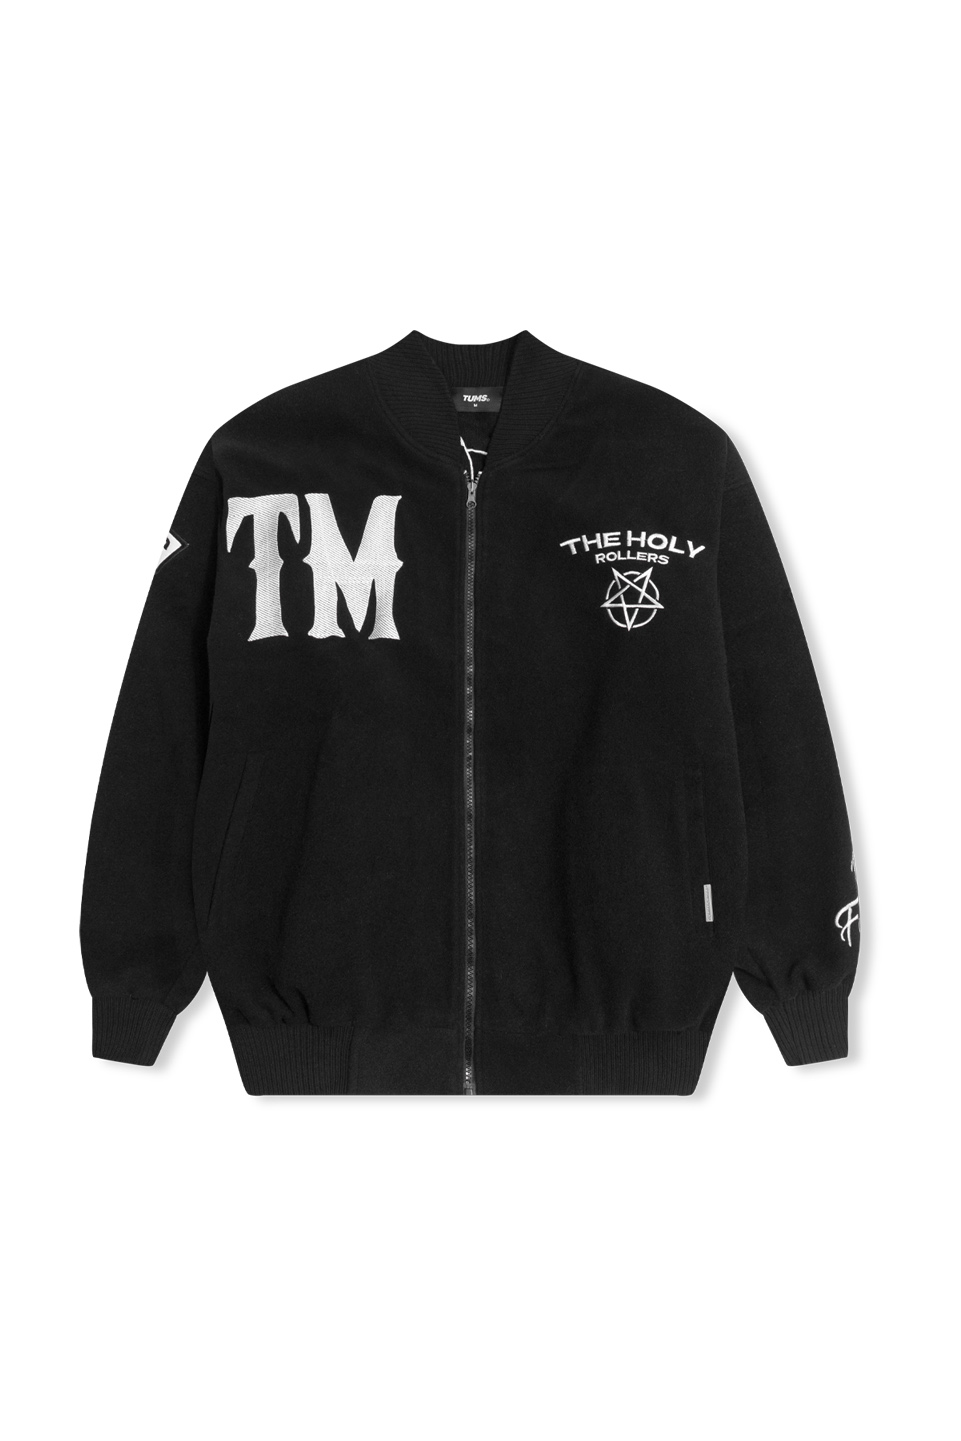 Tum Machines - Scarlet Kingsnake Hoodie Gucci Inspired size S M L XL , giá  480 #tummachines